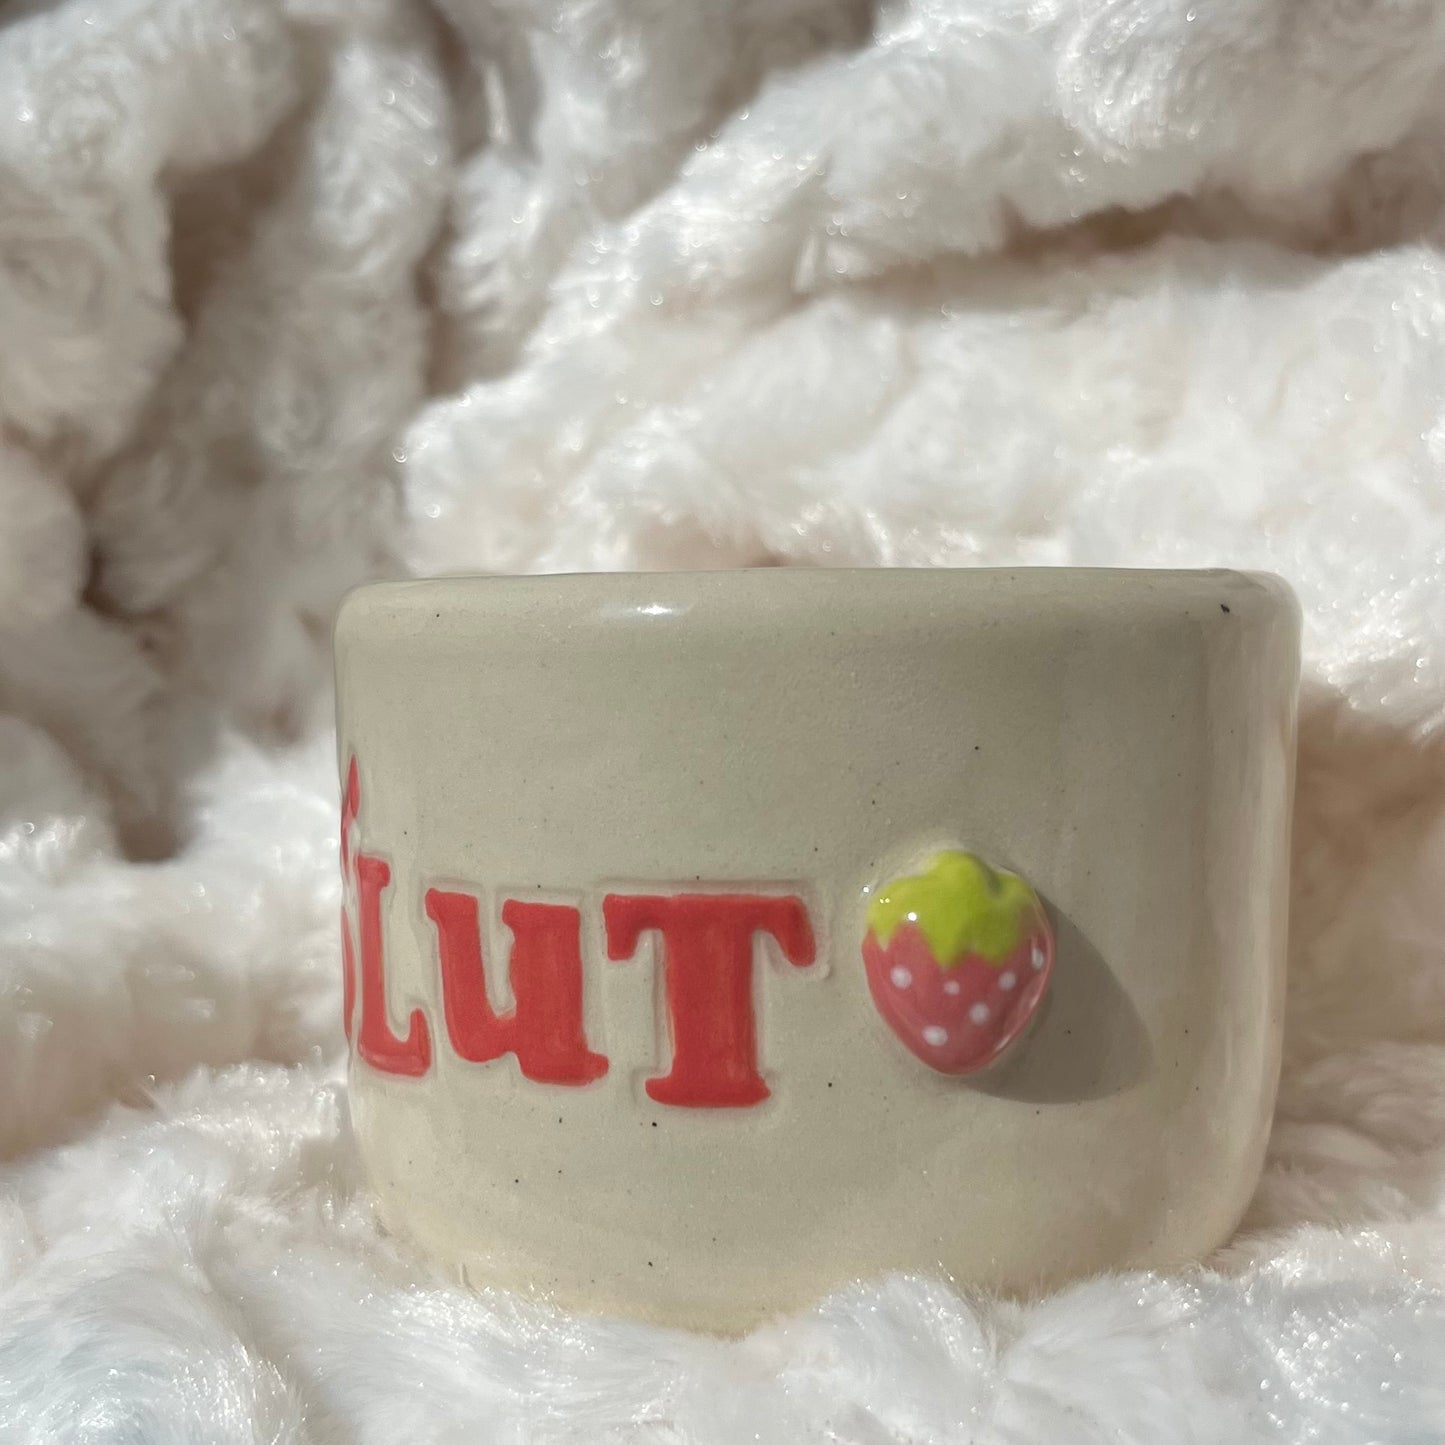 Strawberry ShrekSlut Mug